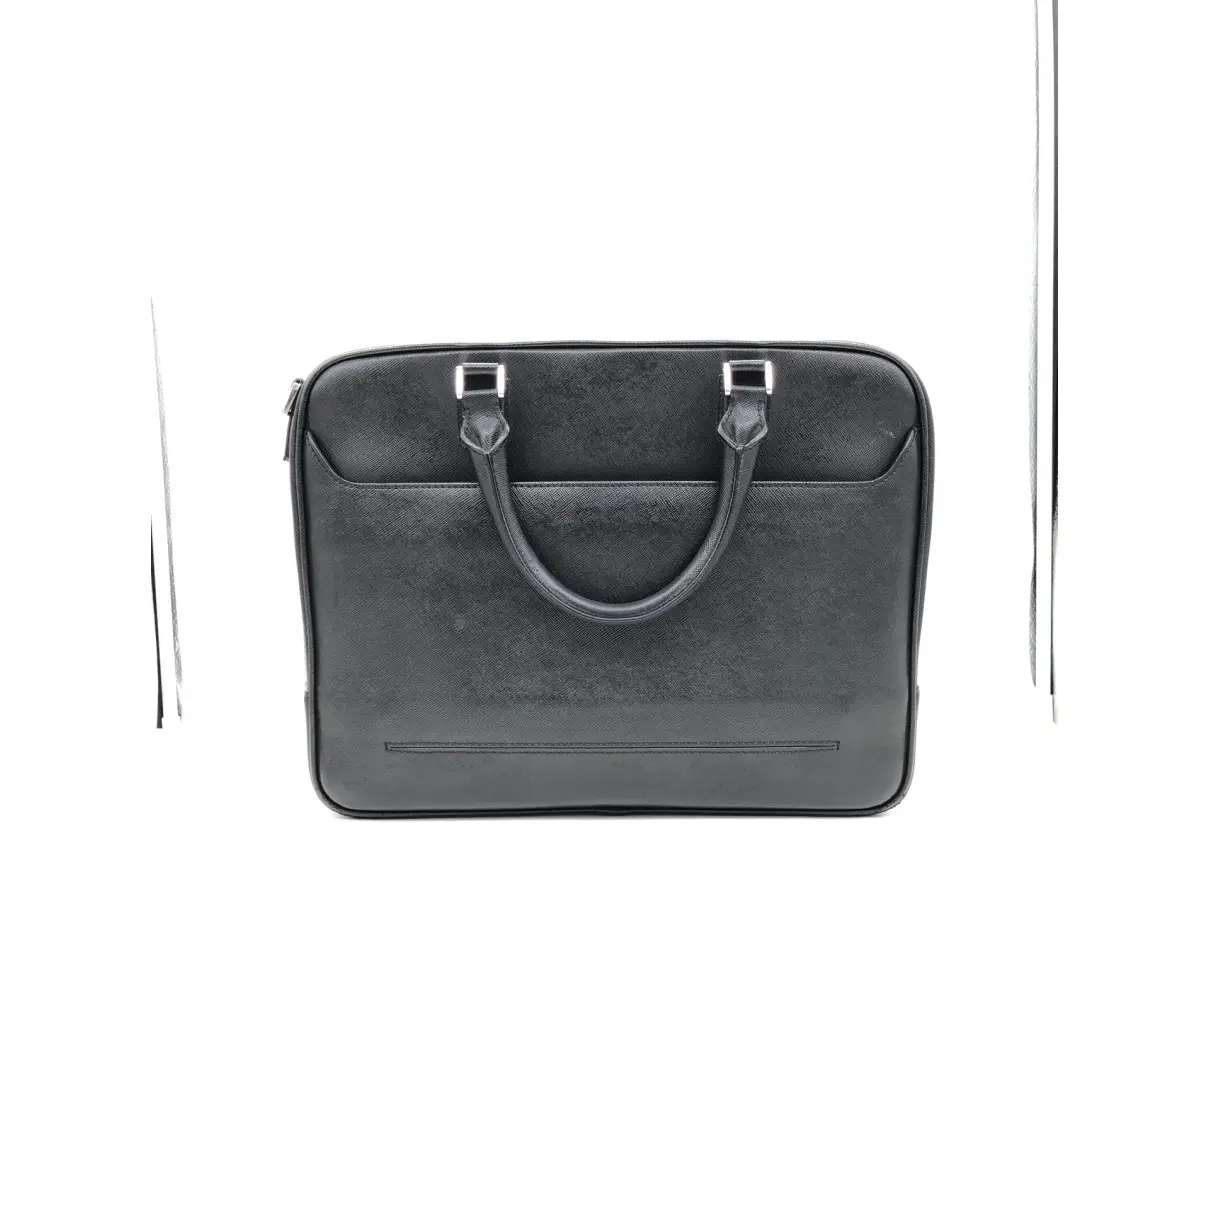 Buy Montblanc Leather satchel online